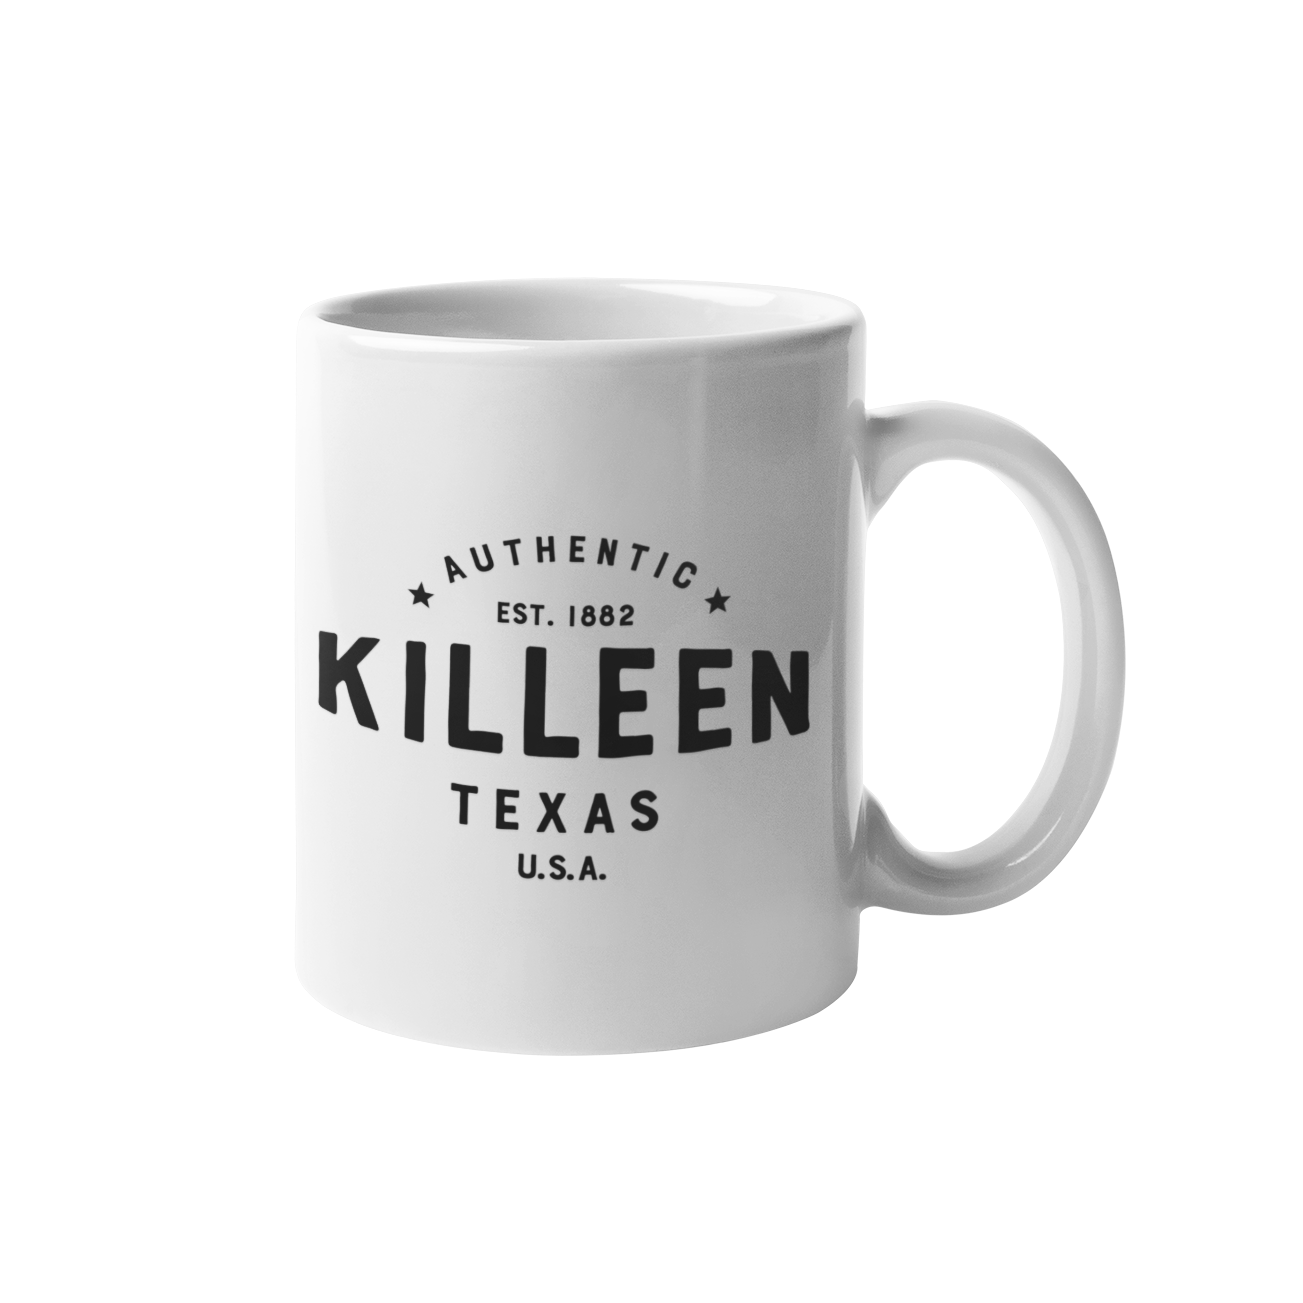 Killeen Texas Mug - Authentic